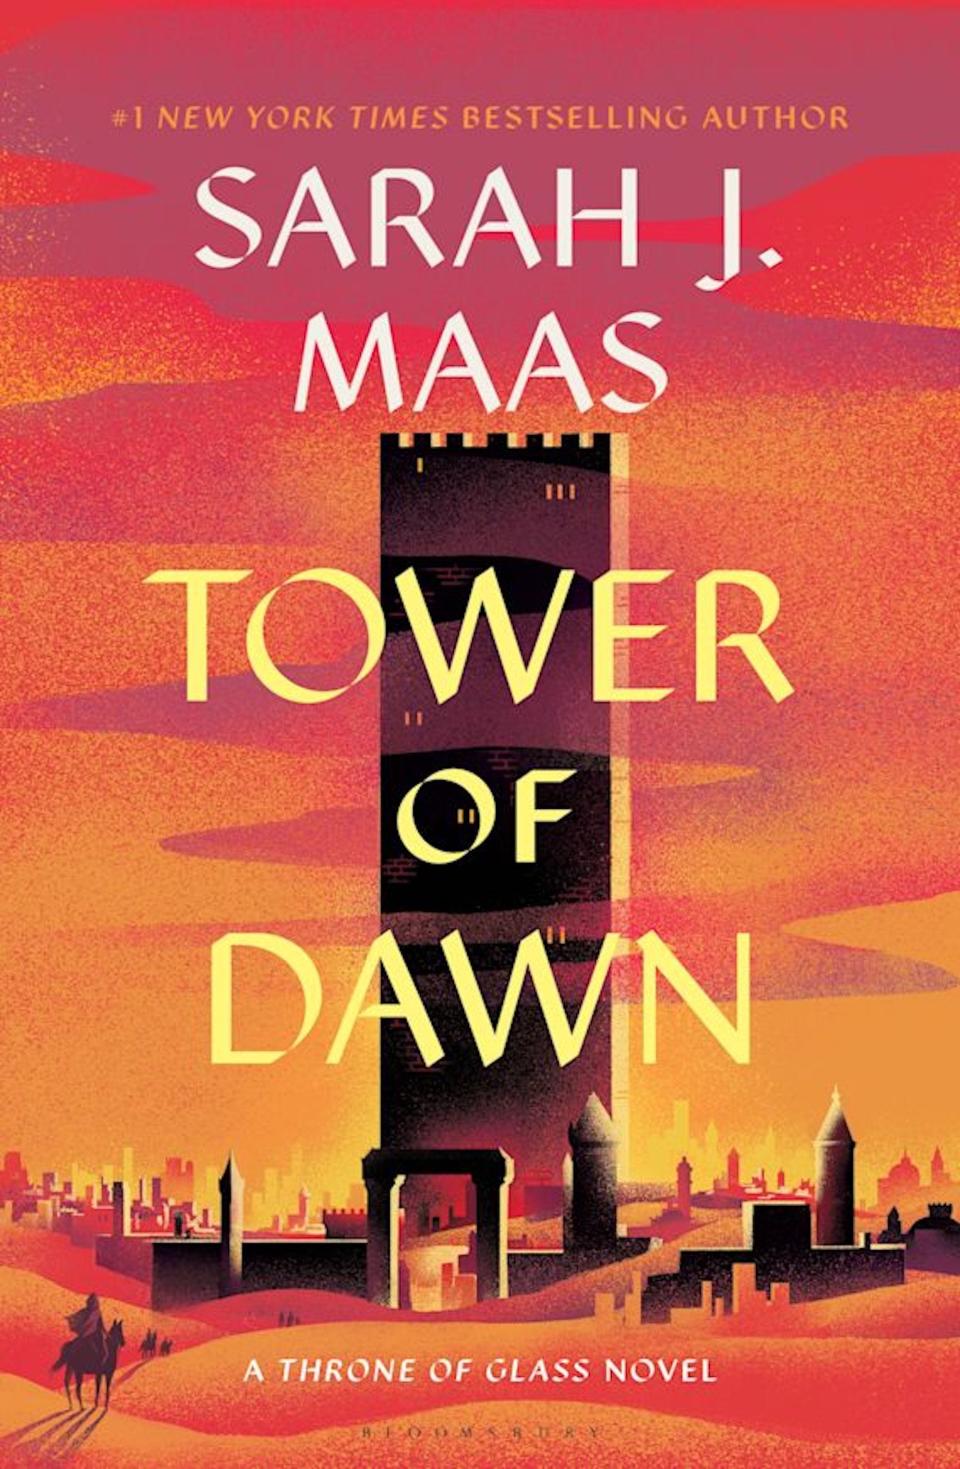 "Tower of Dawn" by Sarah J. Maas.